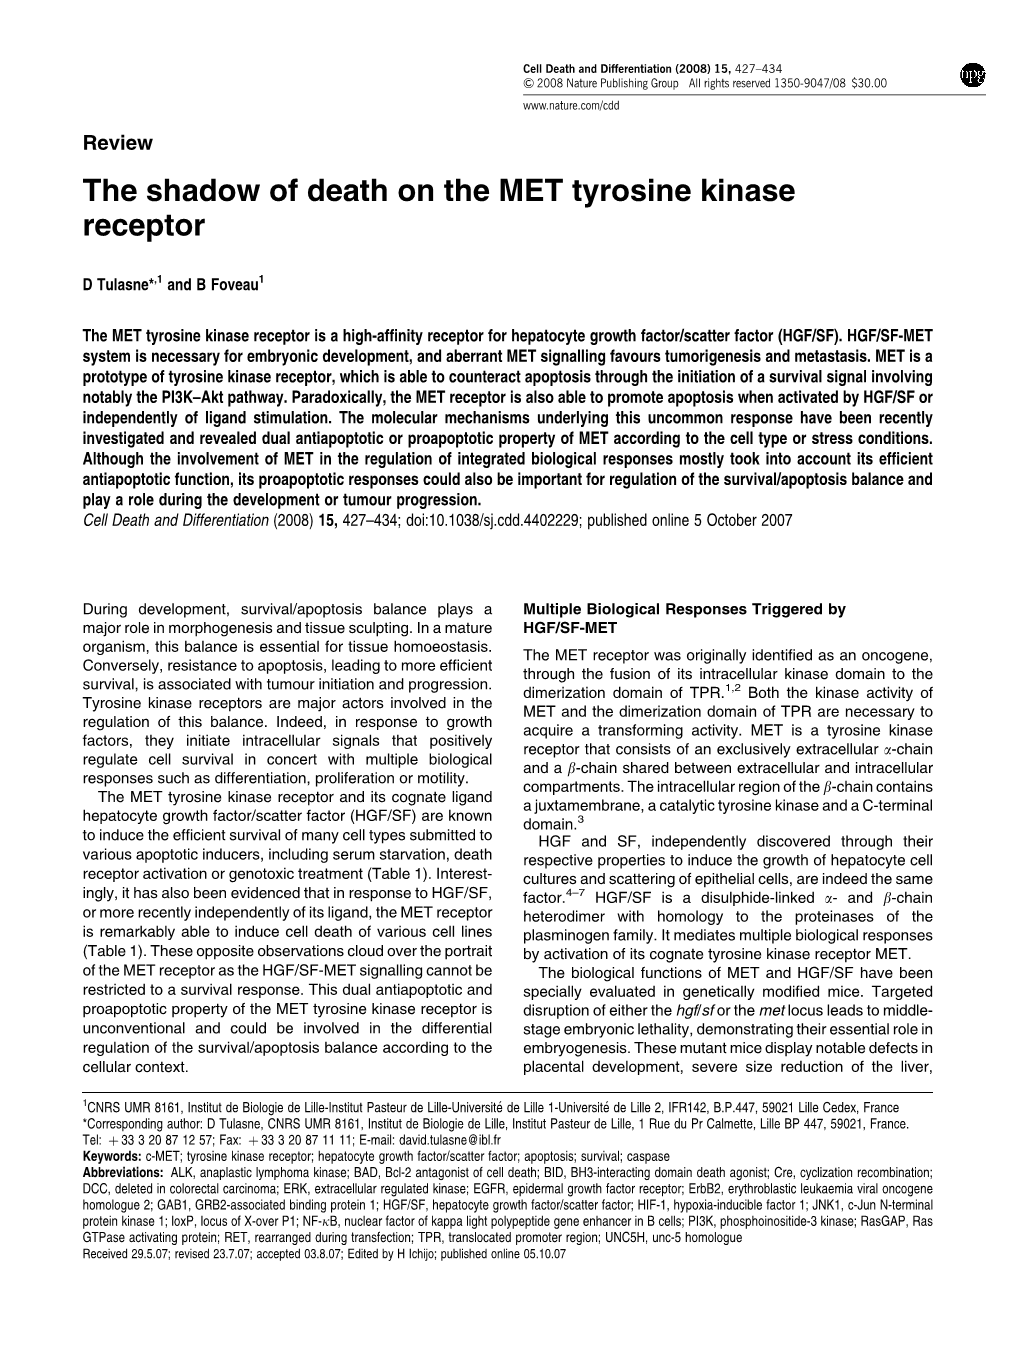 The Shadow of Death on the MET Tyrosine Kinase Receptor